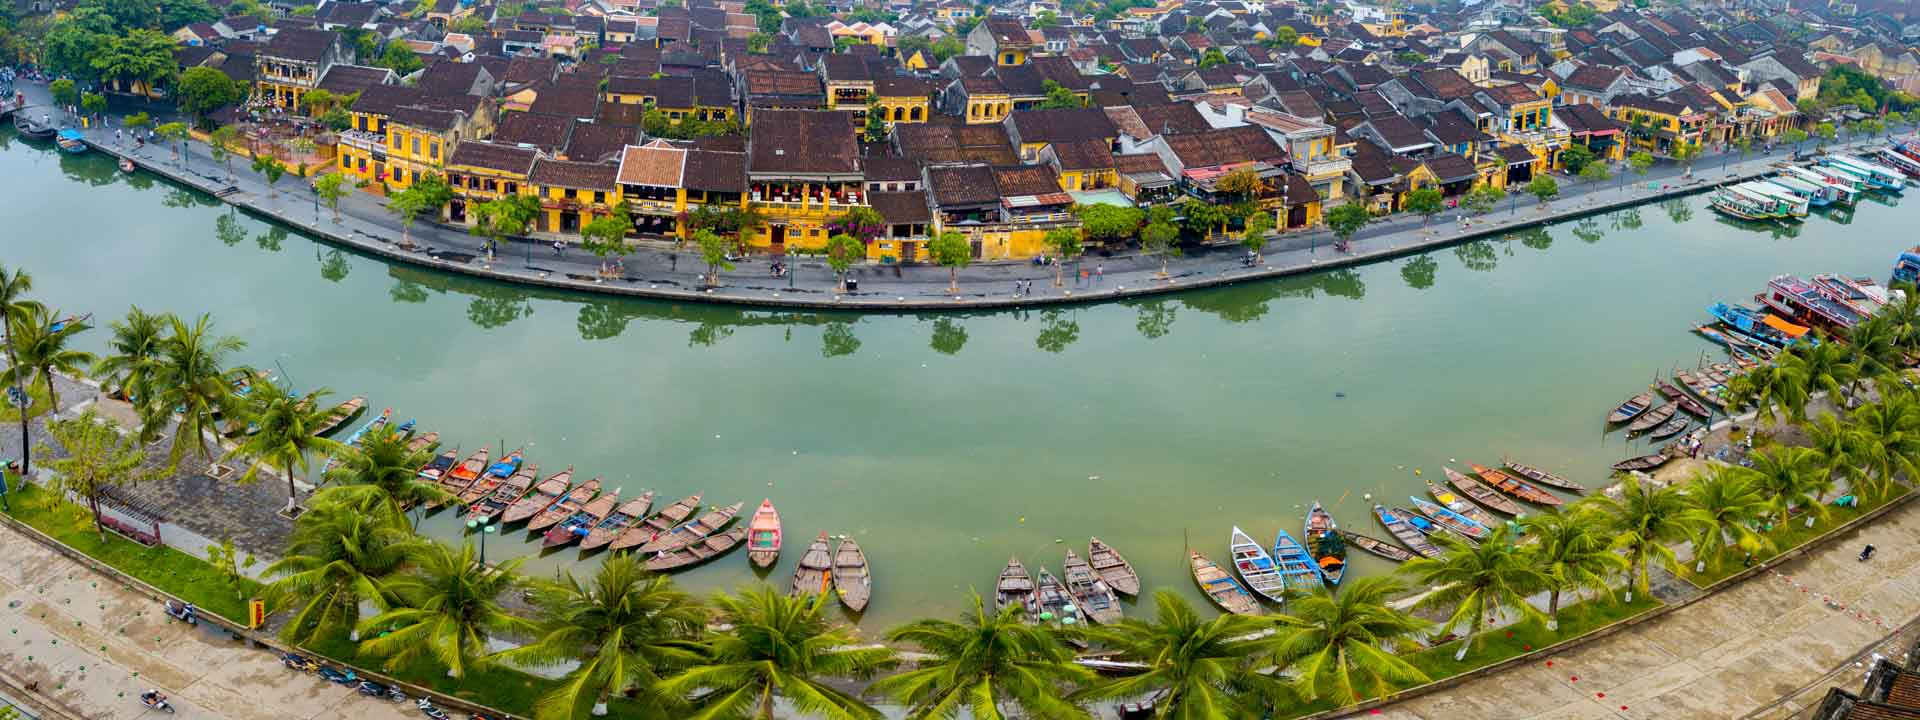 Deep Insight Laos Vietnam Cambodia Tour 3 weeks